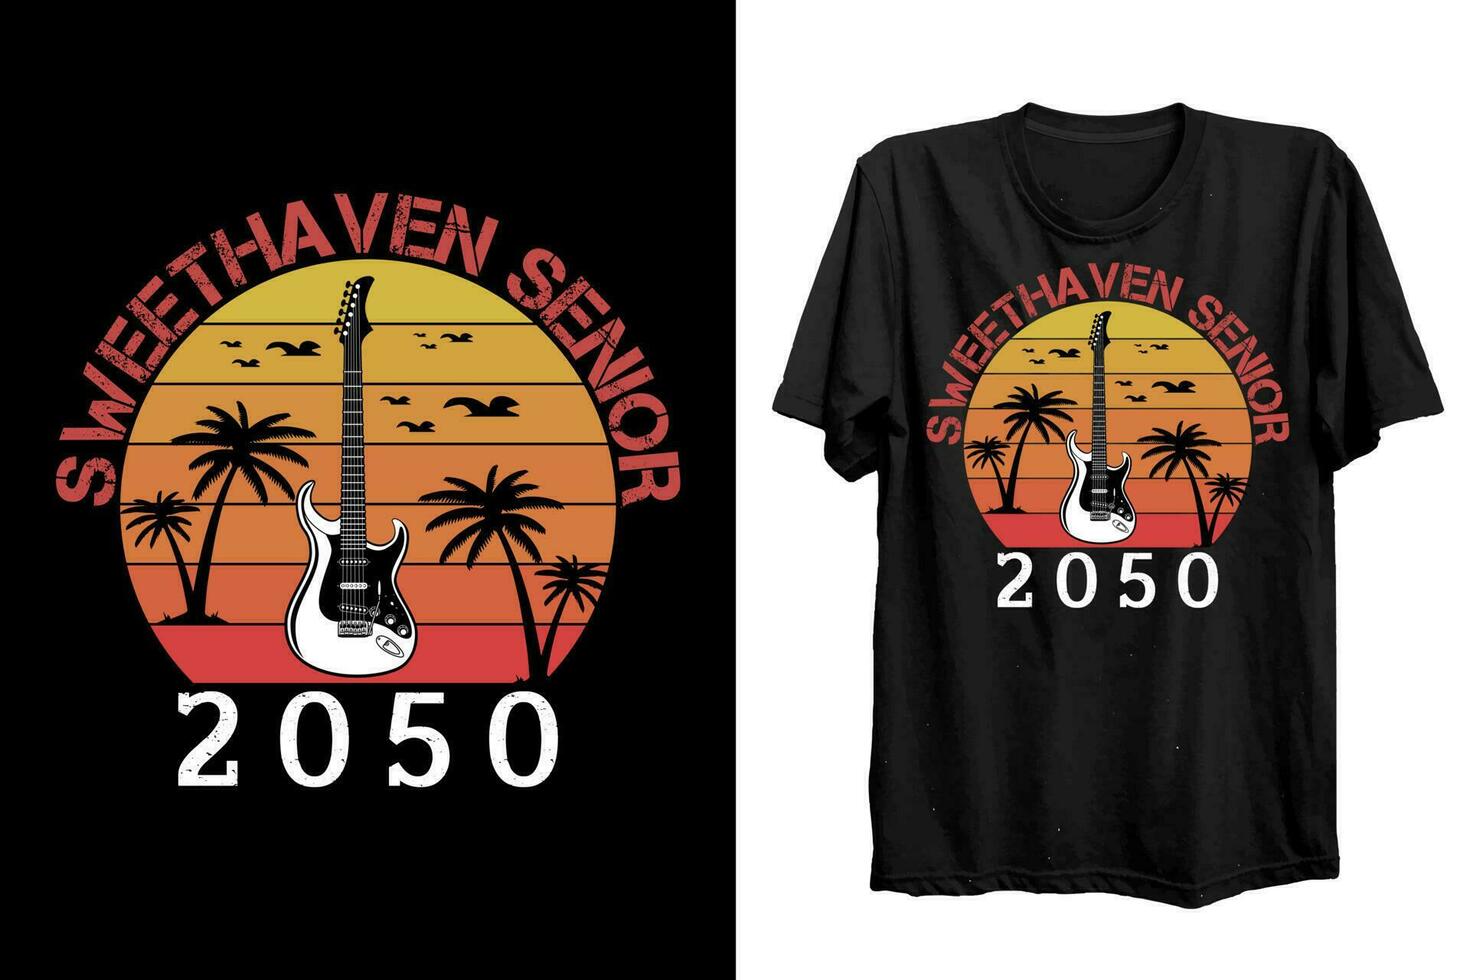 Sweethaven mayor 2050 t camisa diseño. verano t camisa diseño vector para t camisa amante